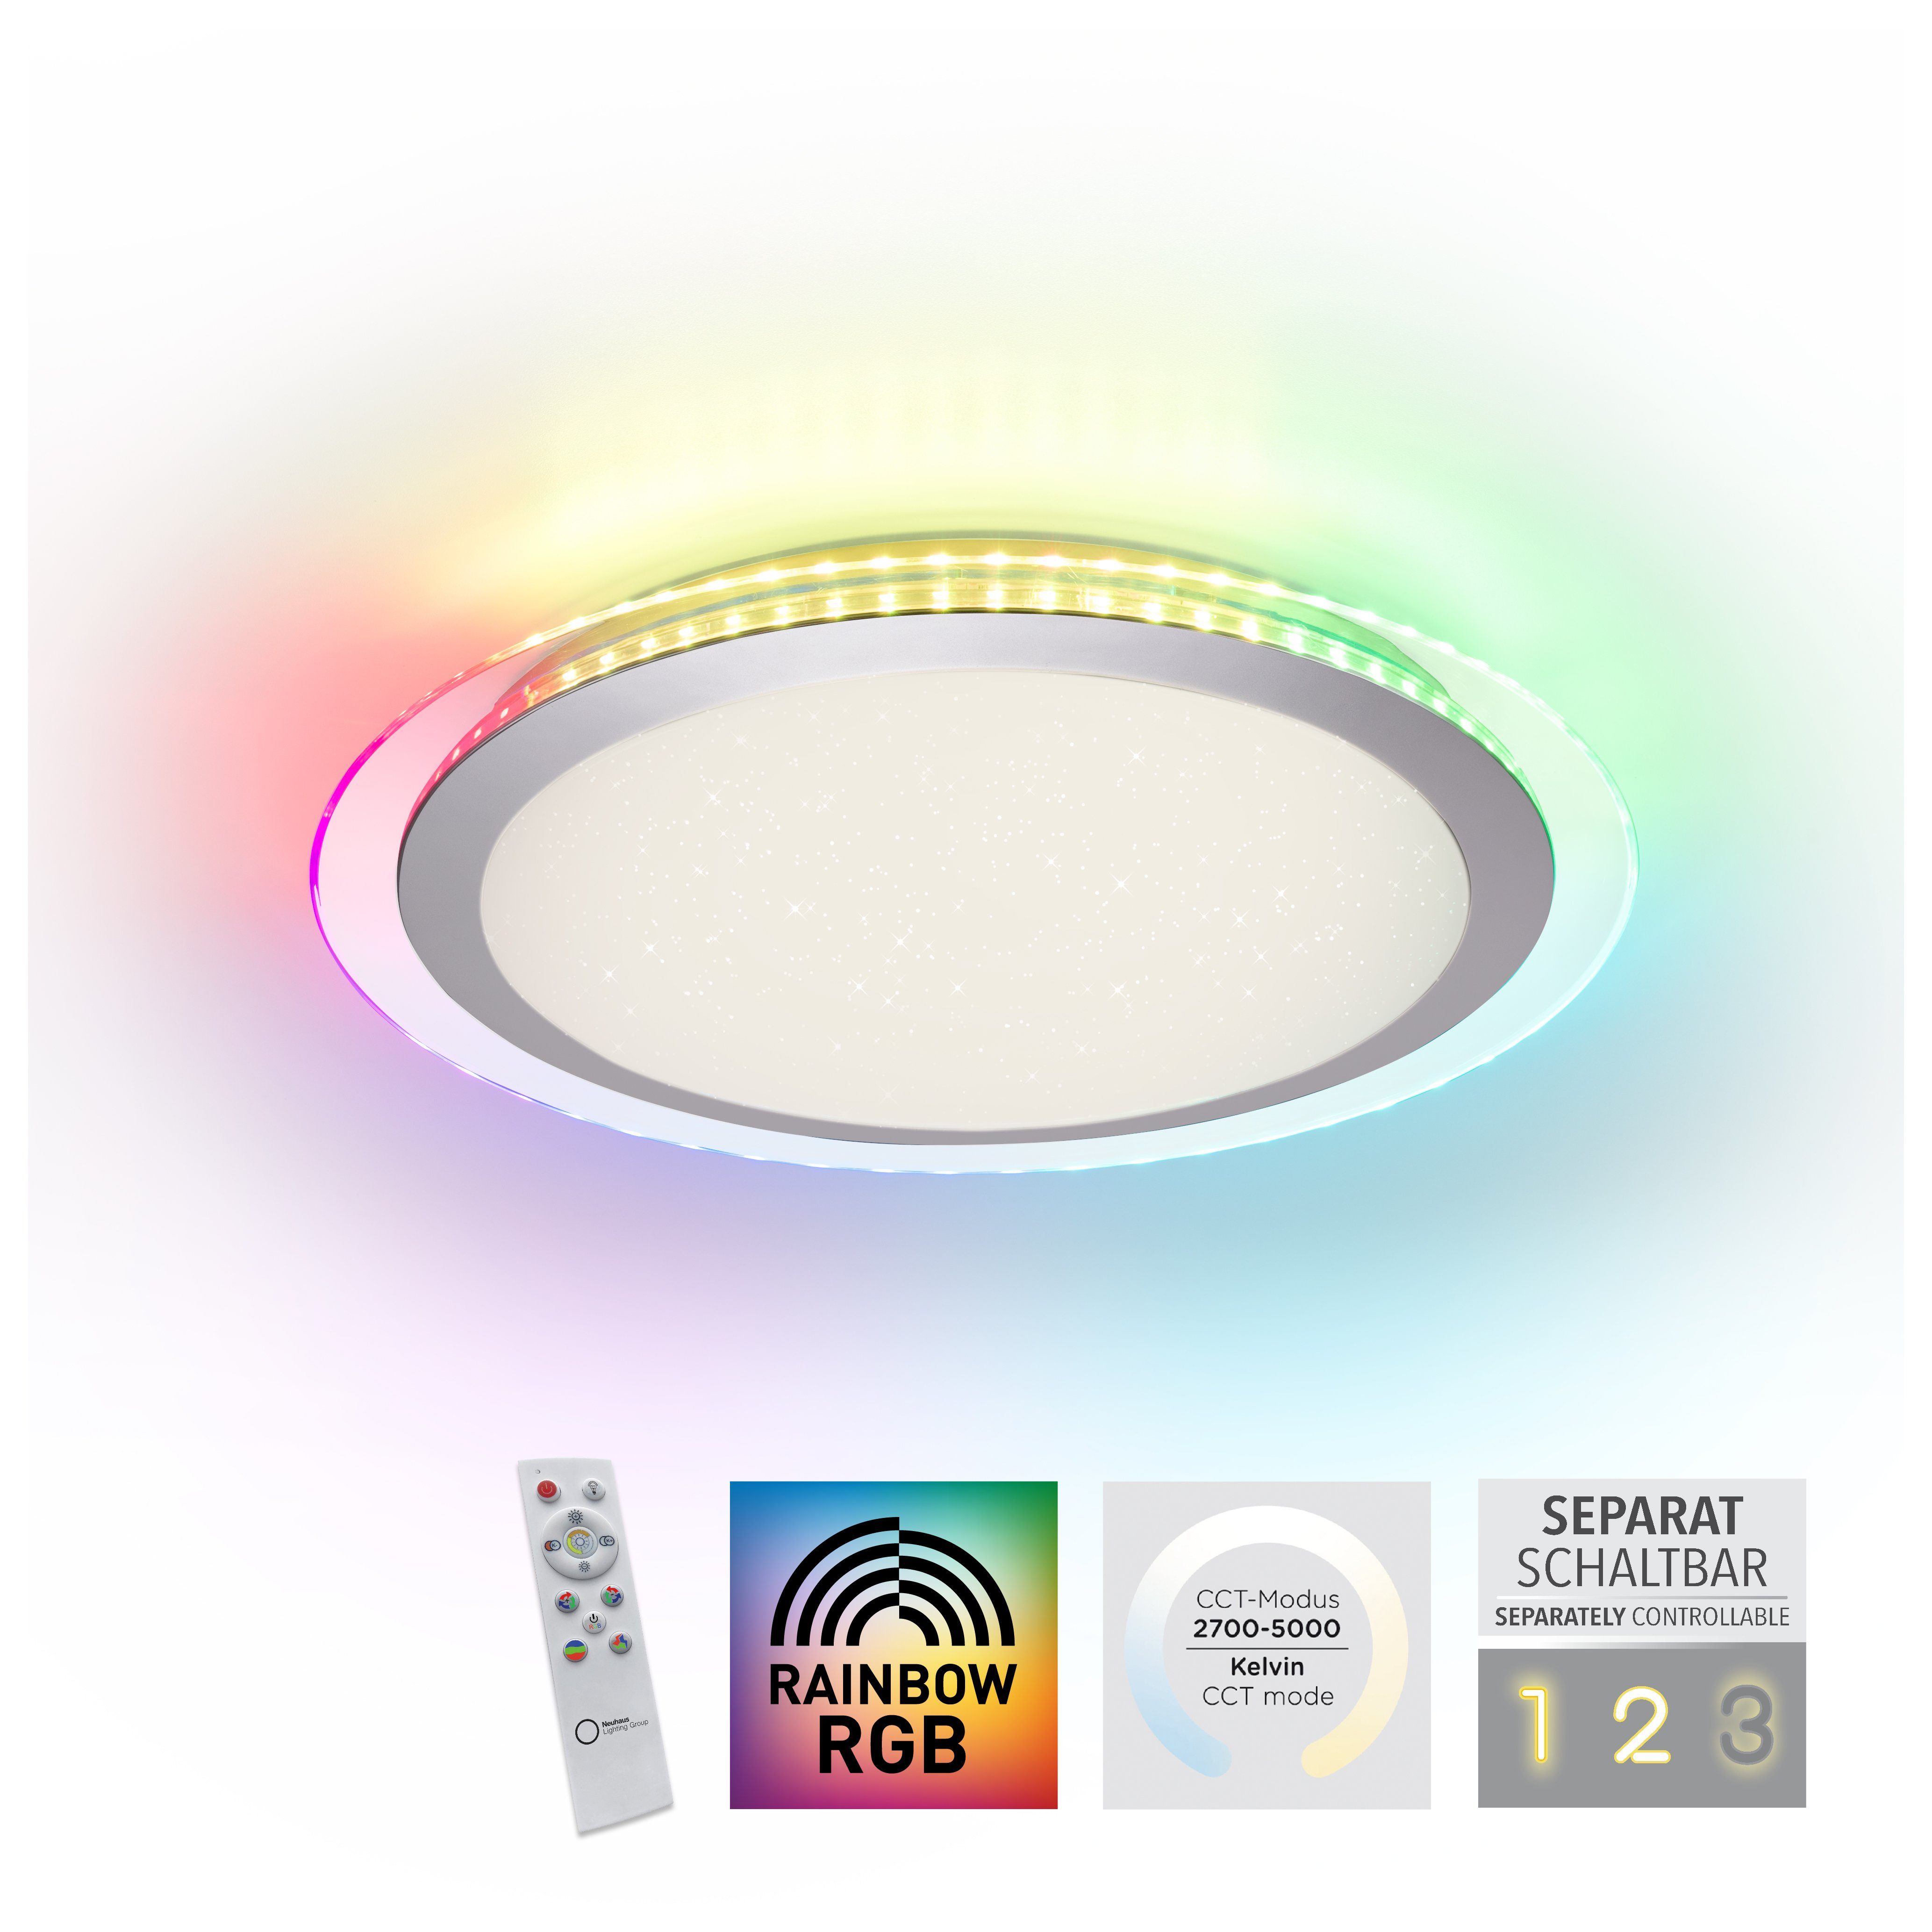 LED, integriert, Infrarot CYBA, - dimmbar, - inkl. warmweiß RGB-Rainbow, Fernbedienung, fest Direkt kaltweiß, LED Leuchten CCT Deckenleuchte über